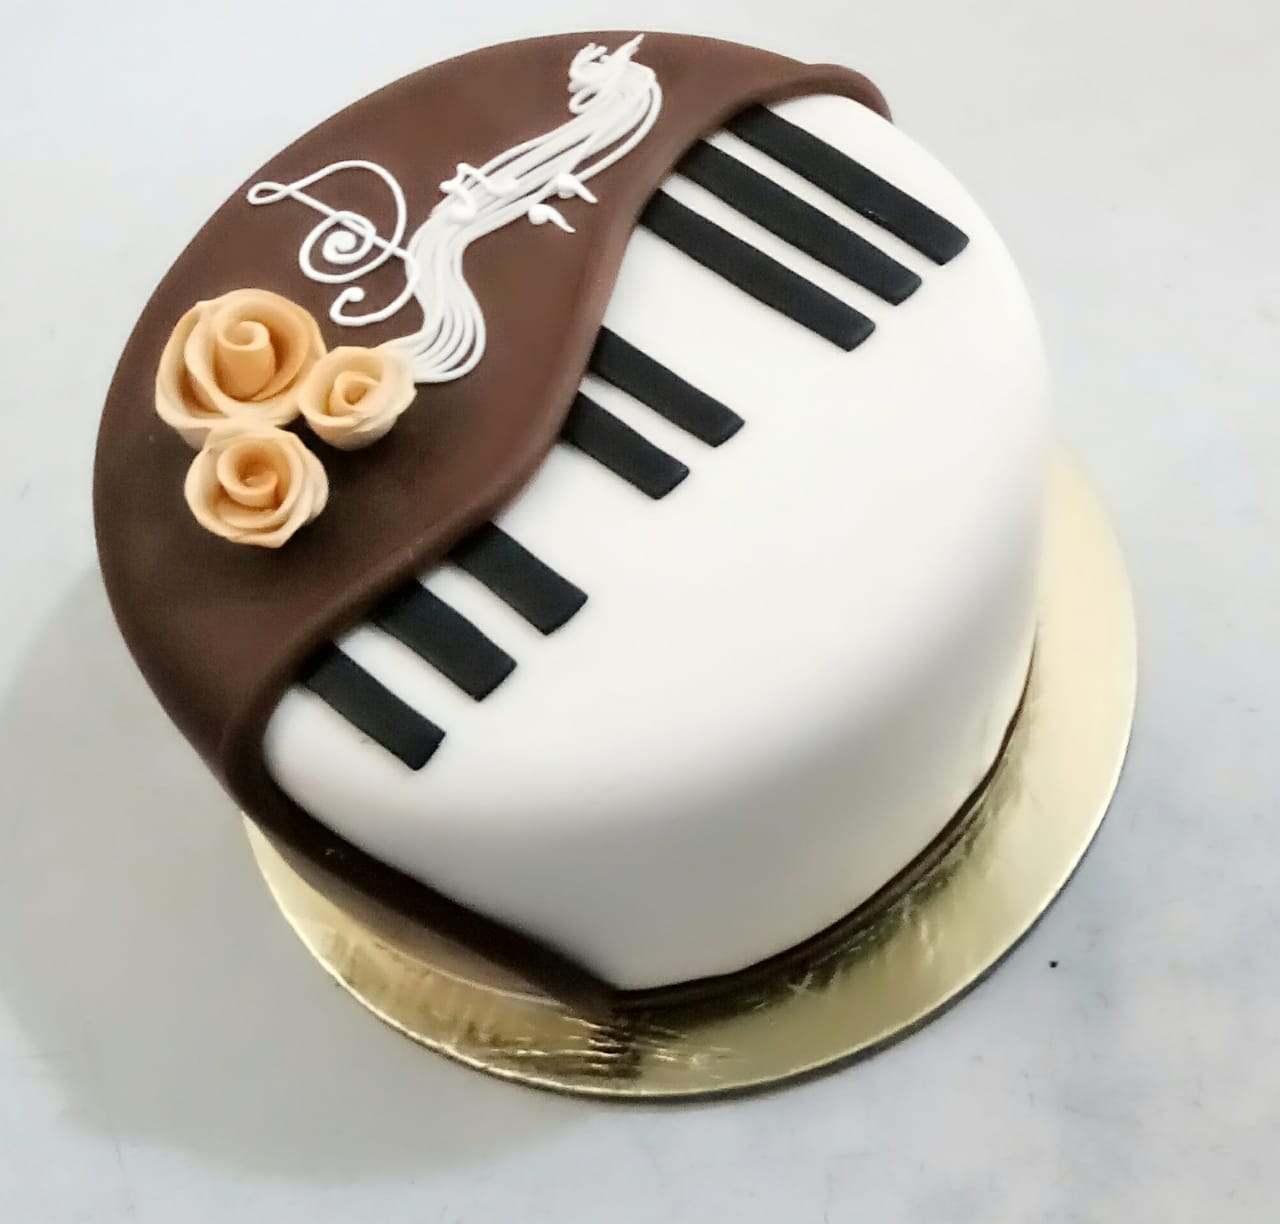 Piano Design Fondant Cake